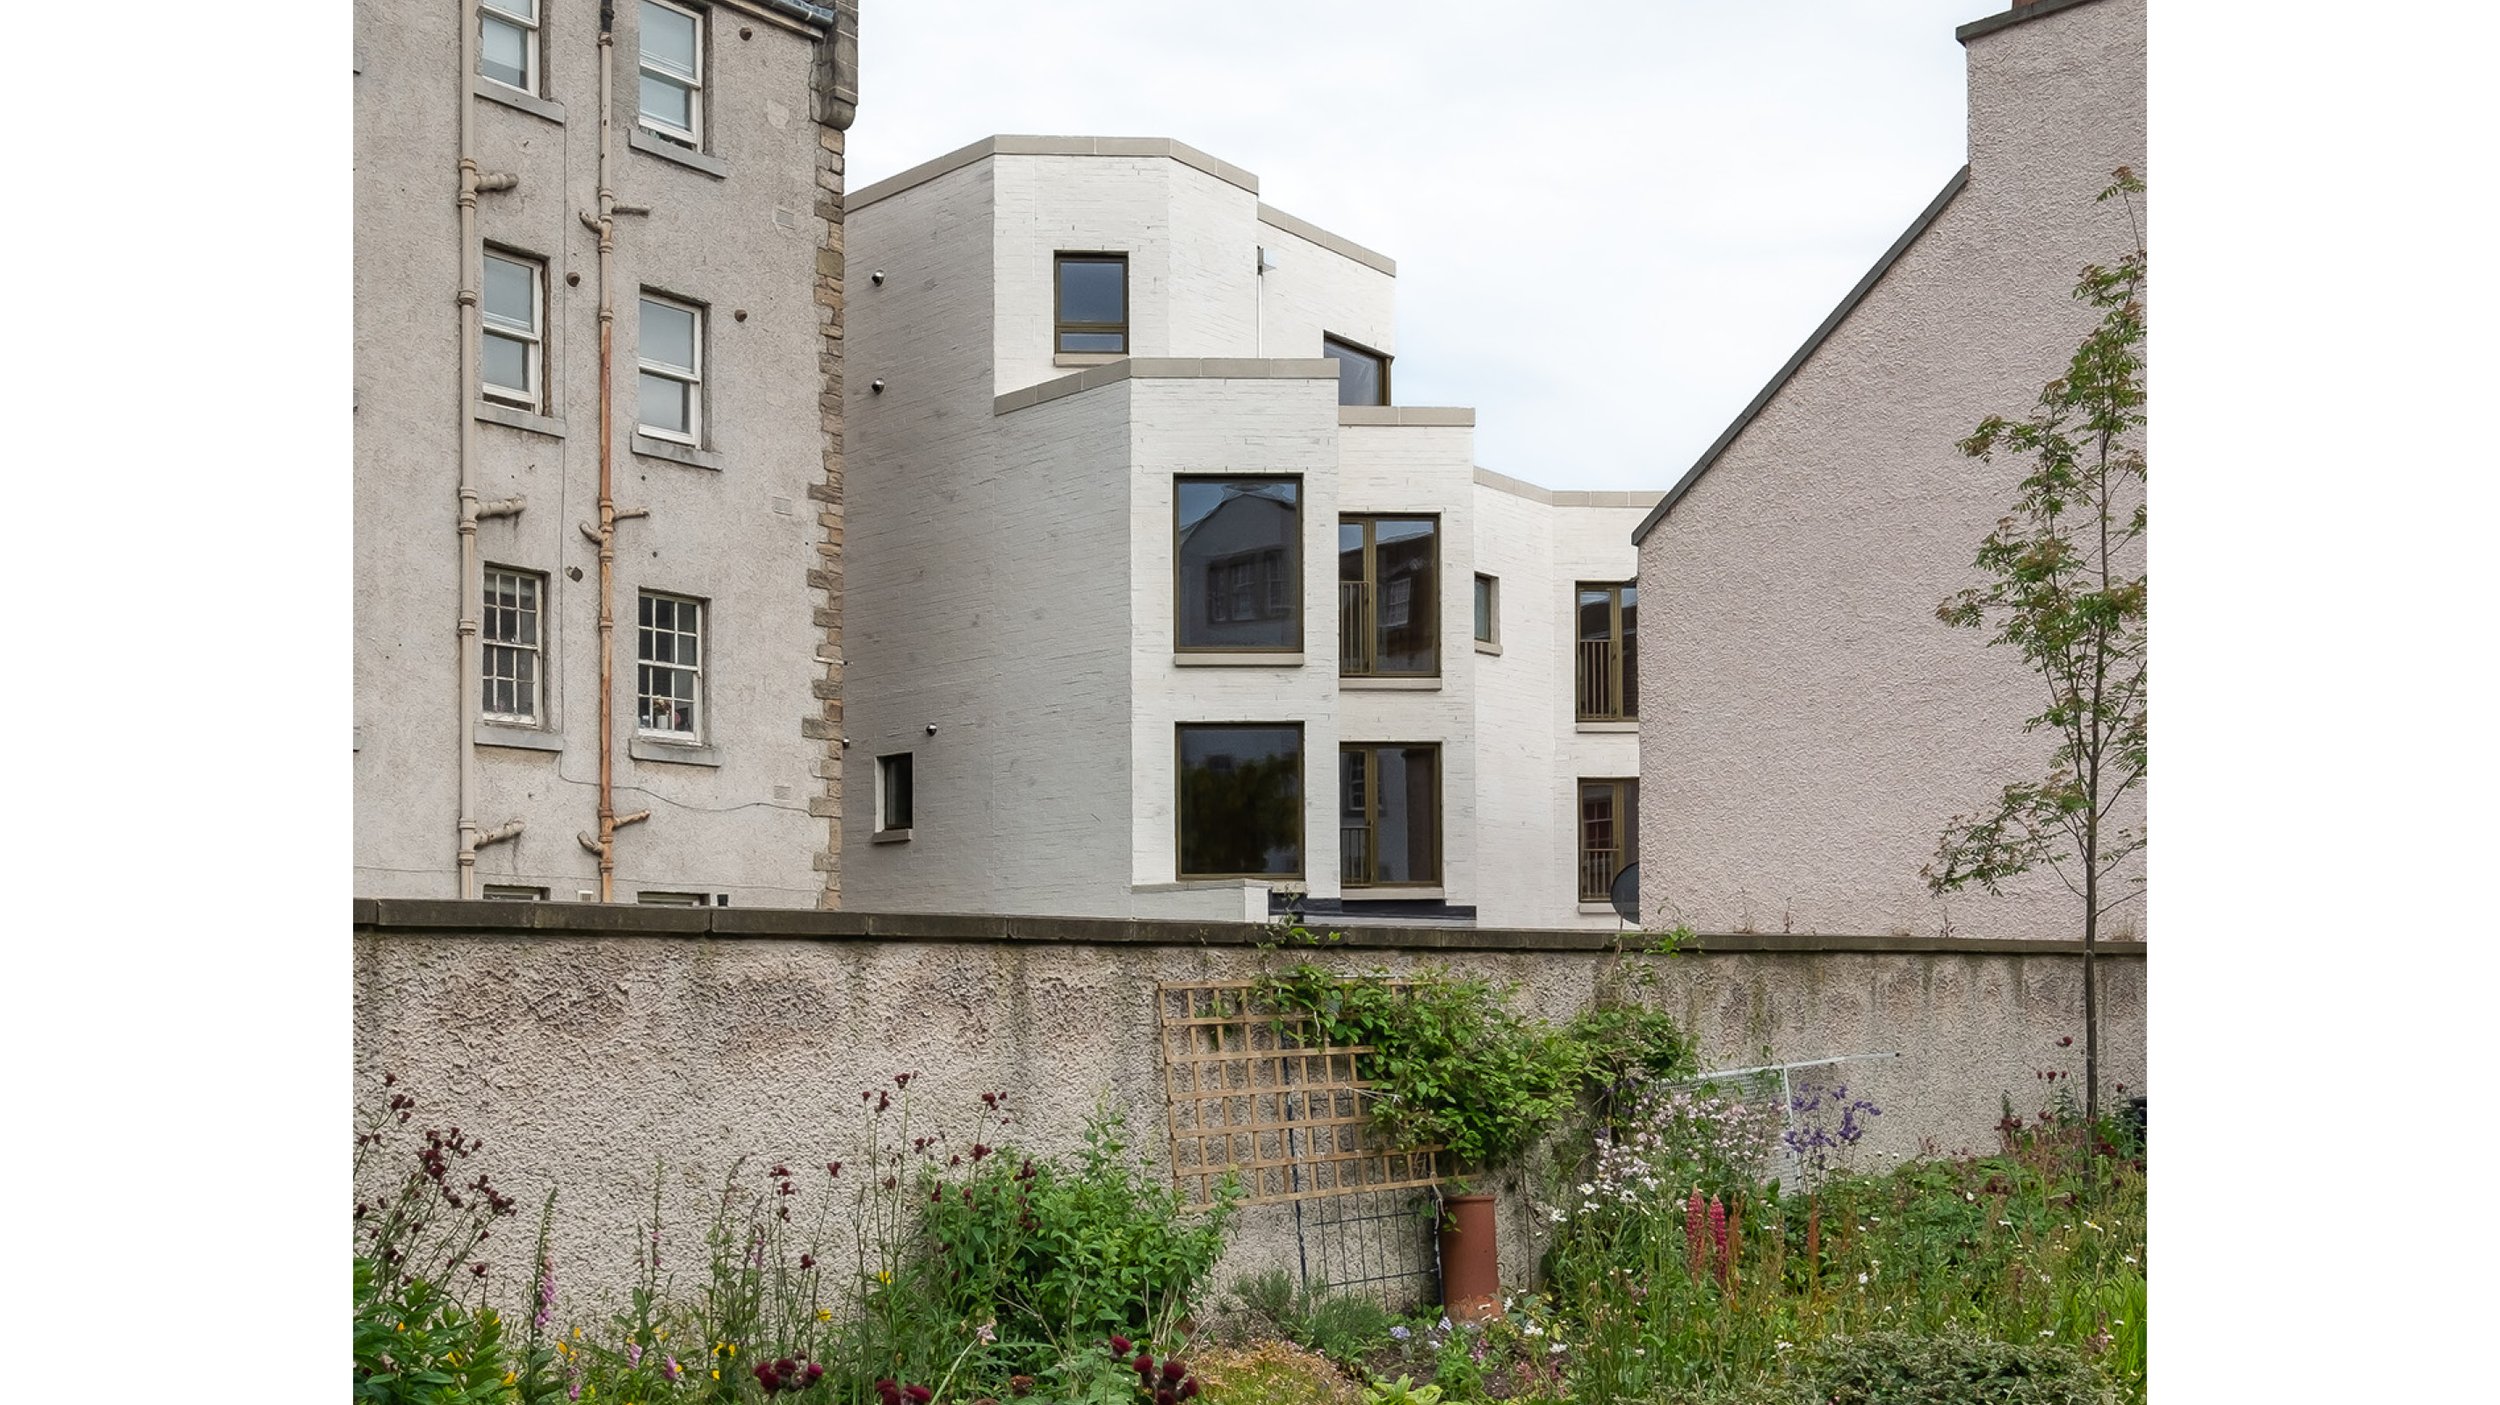 eaa-edinburgh-architectural-association-scotland-uk-awards-2022-winner-residential-project-4.jpg